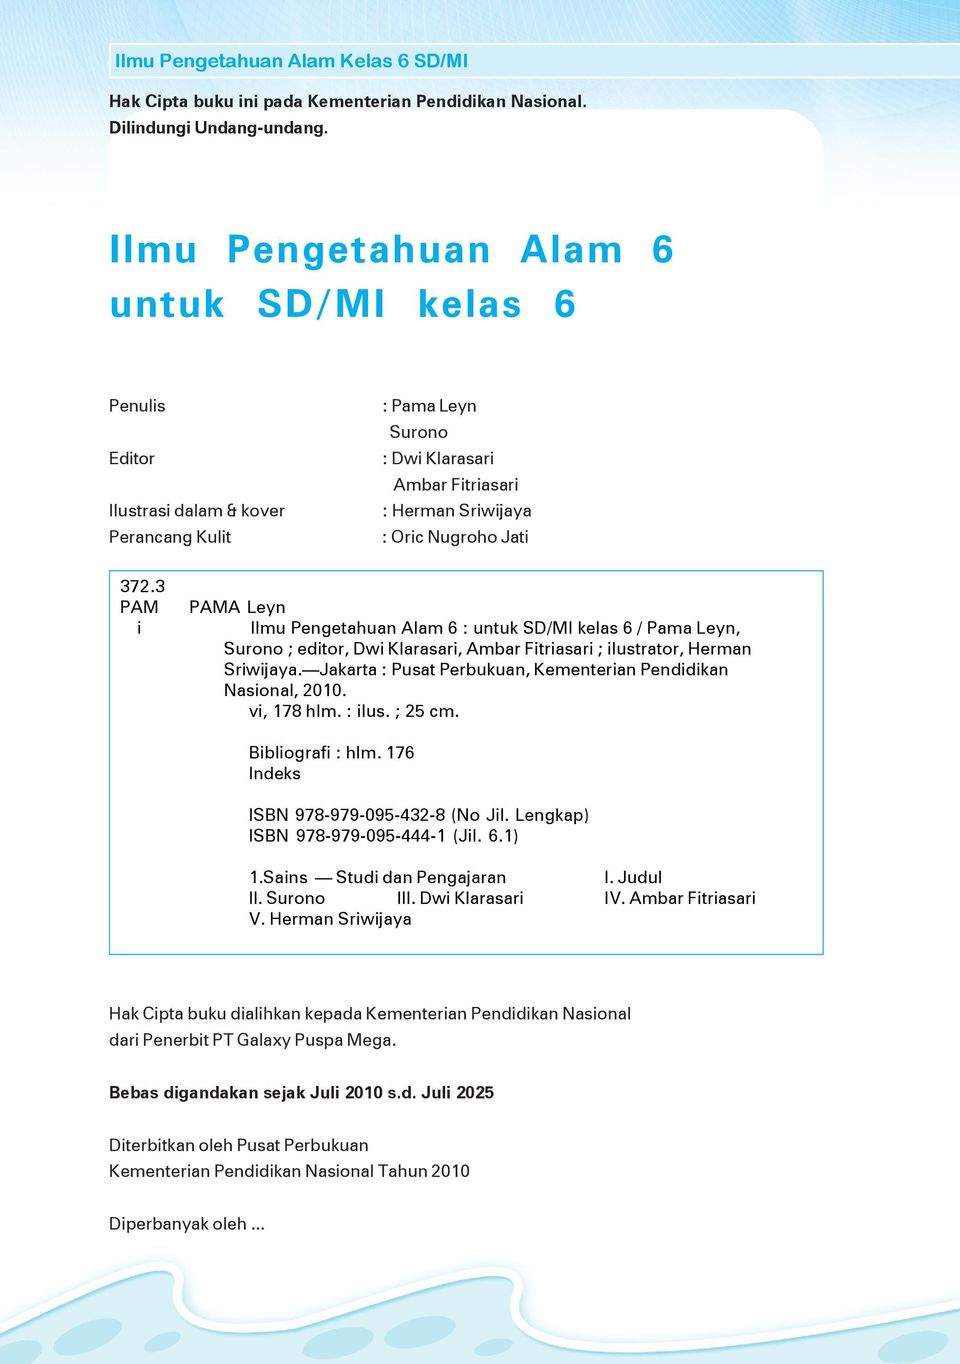 3 PAM PAMA Leyn i Ilmu Pengetahuan Alam 6 : untuk SD/MI kelas 6 / Pama Leyn, Surono ; editor, Dwi Klarasari, Ambar Fitriasari ; ilustrator, Herman Sriwijaya.